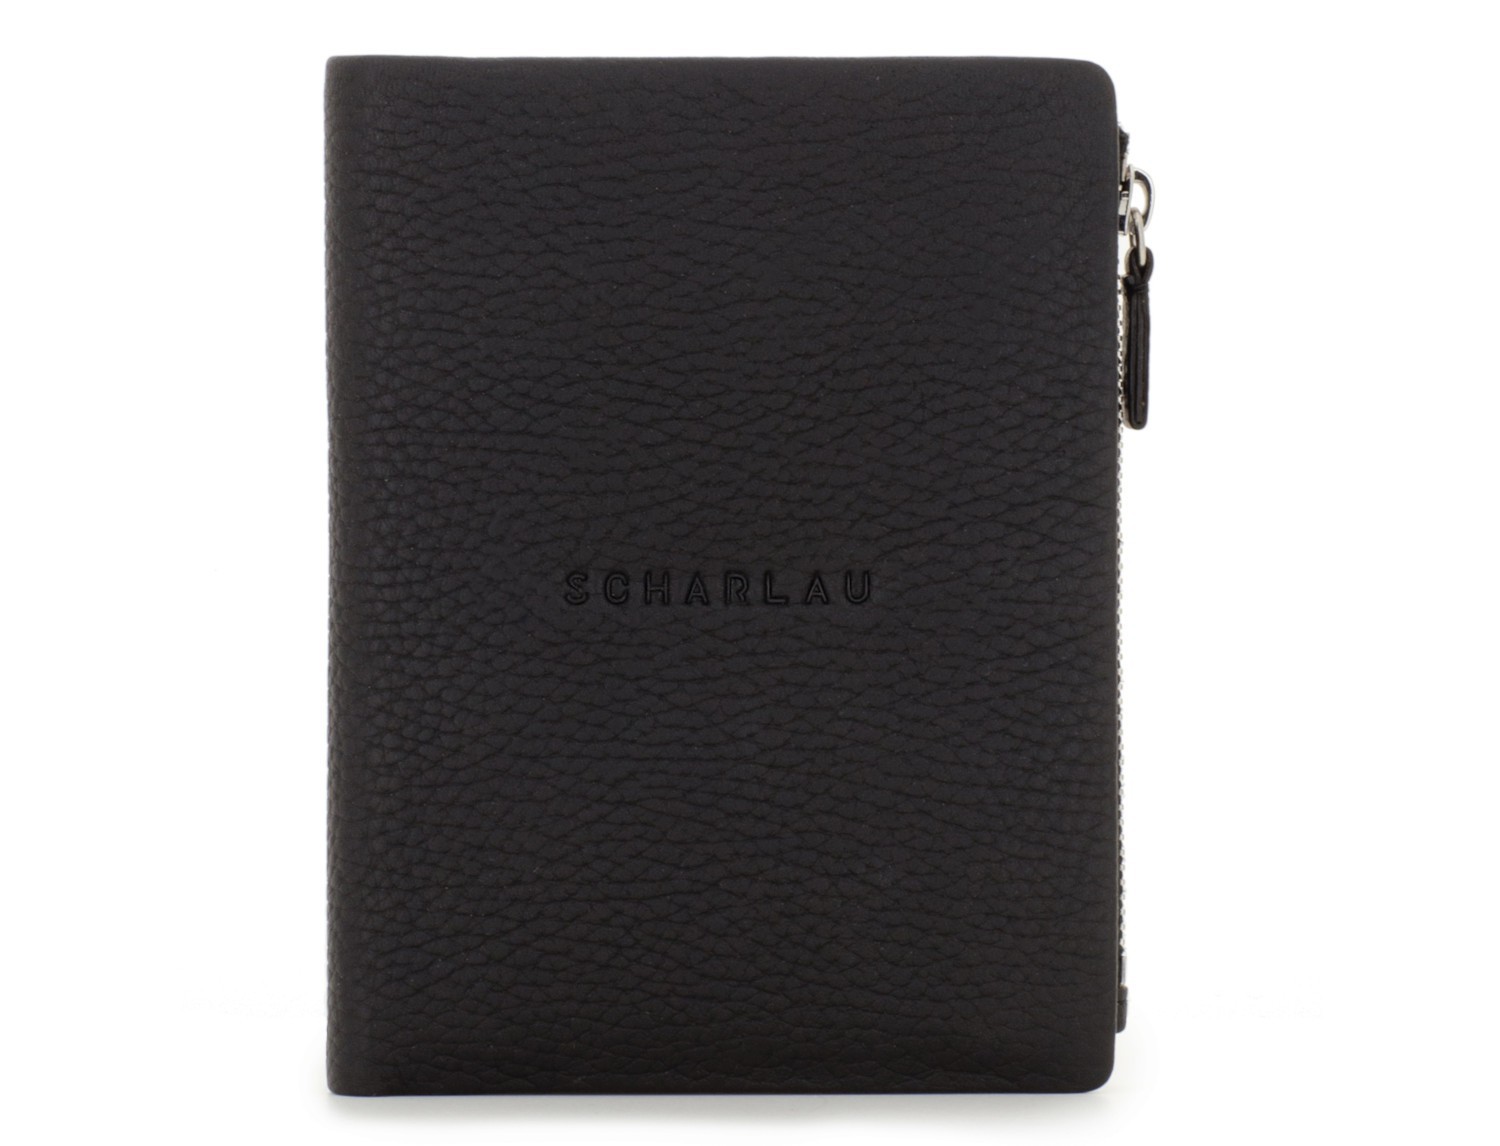 Leather wallet black front